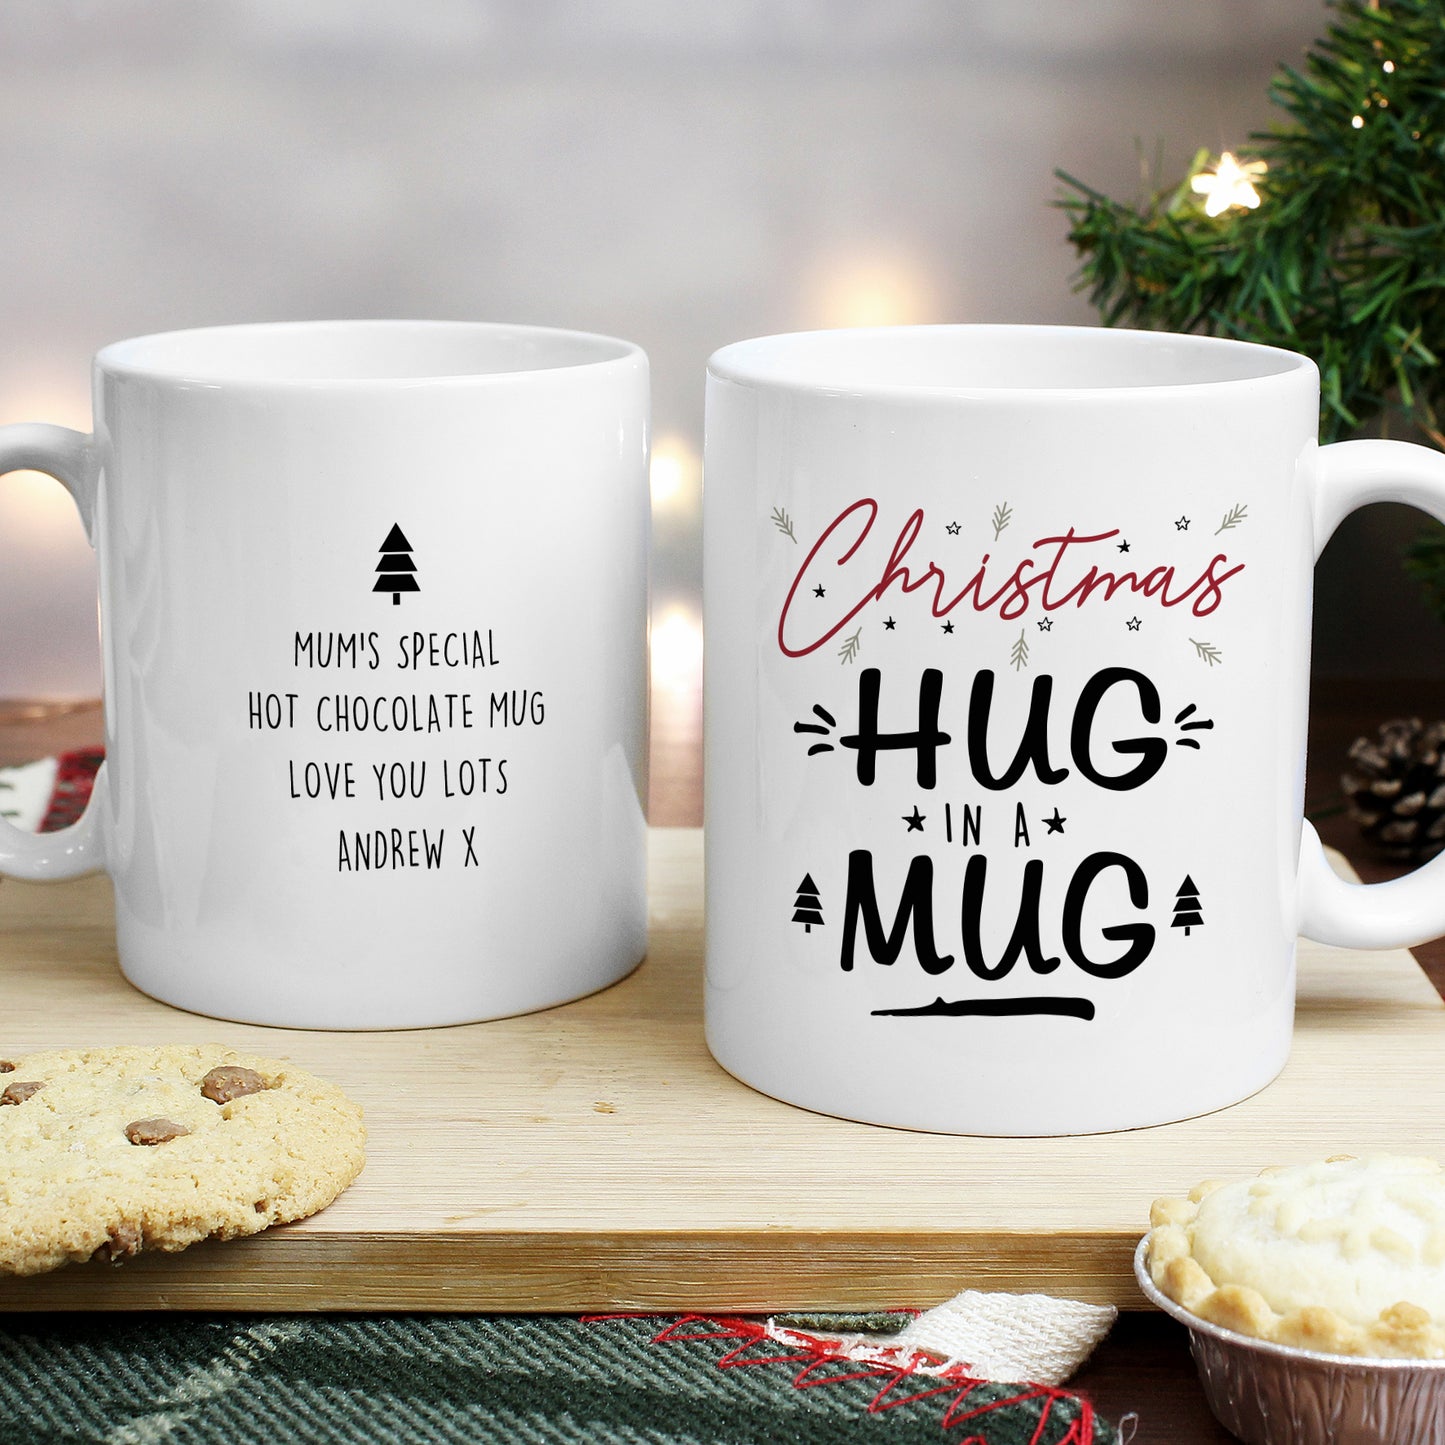 Personalised Christmas Hug Mug - Personalise It!